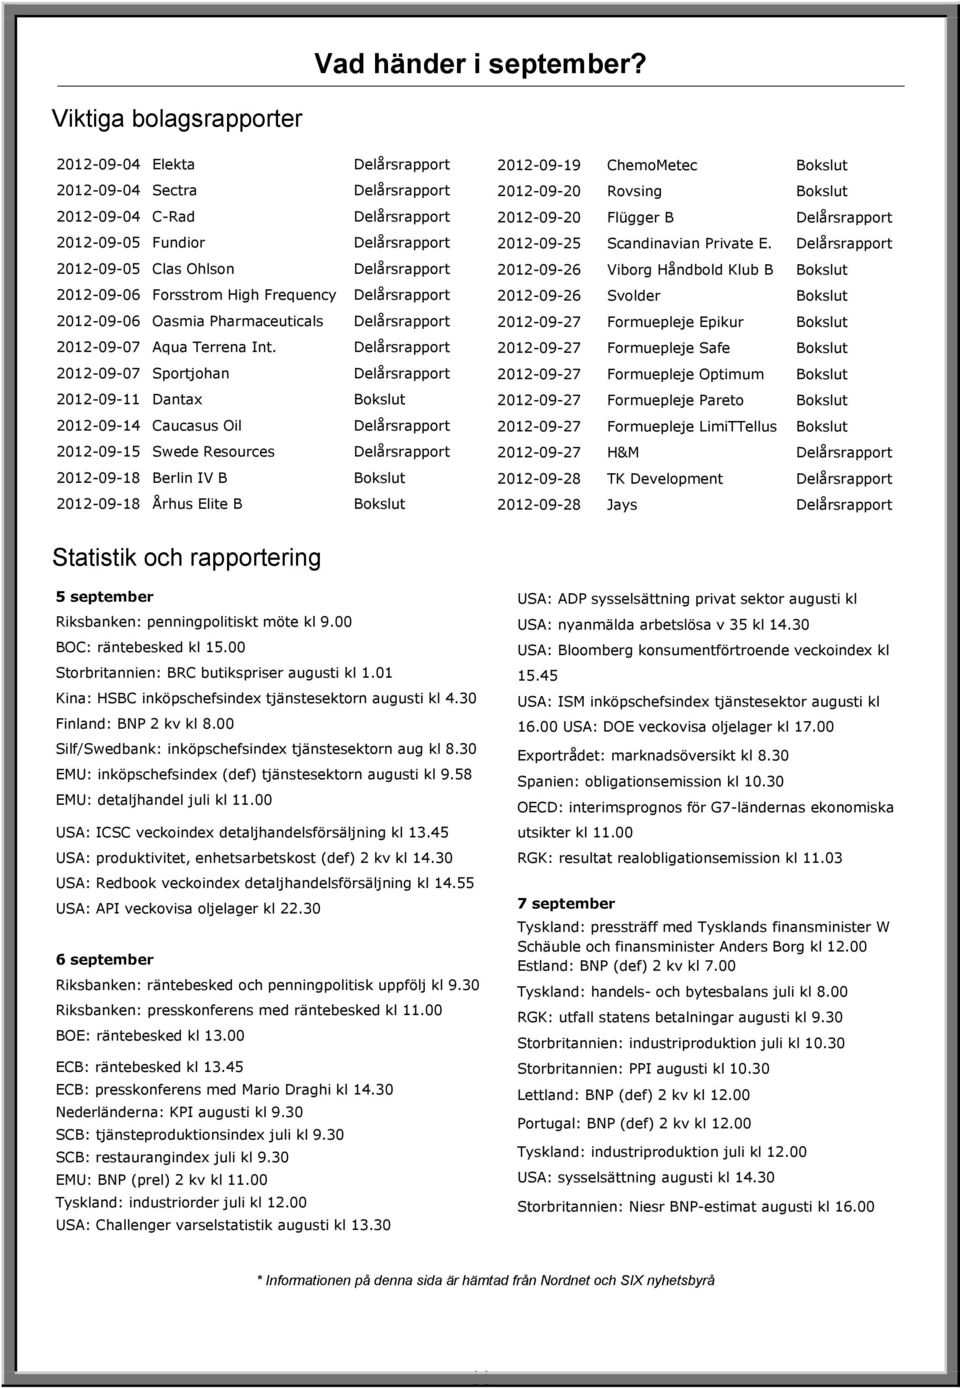 Forsstrom High Frequency Delårsrapport 2012-09-06 Oasmia Pharmaceuticals Delårsrapport 2012-09-07 Aqua Terrena Int.